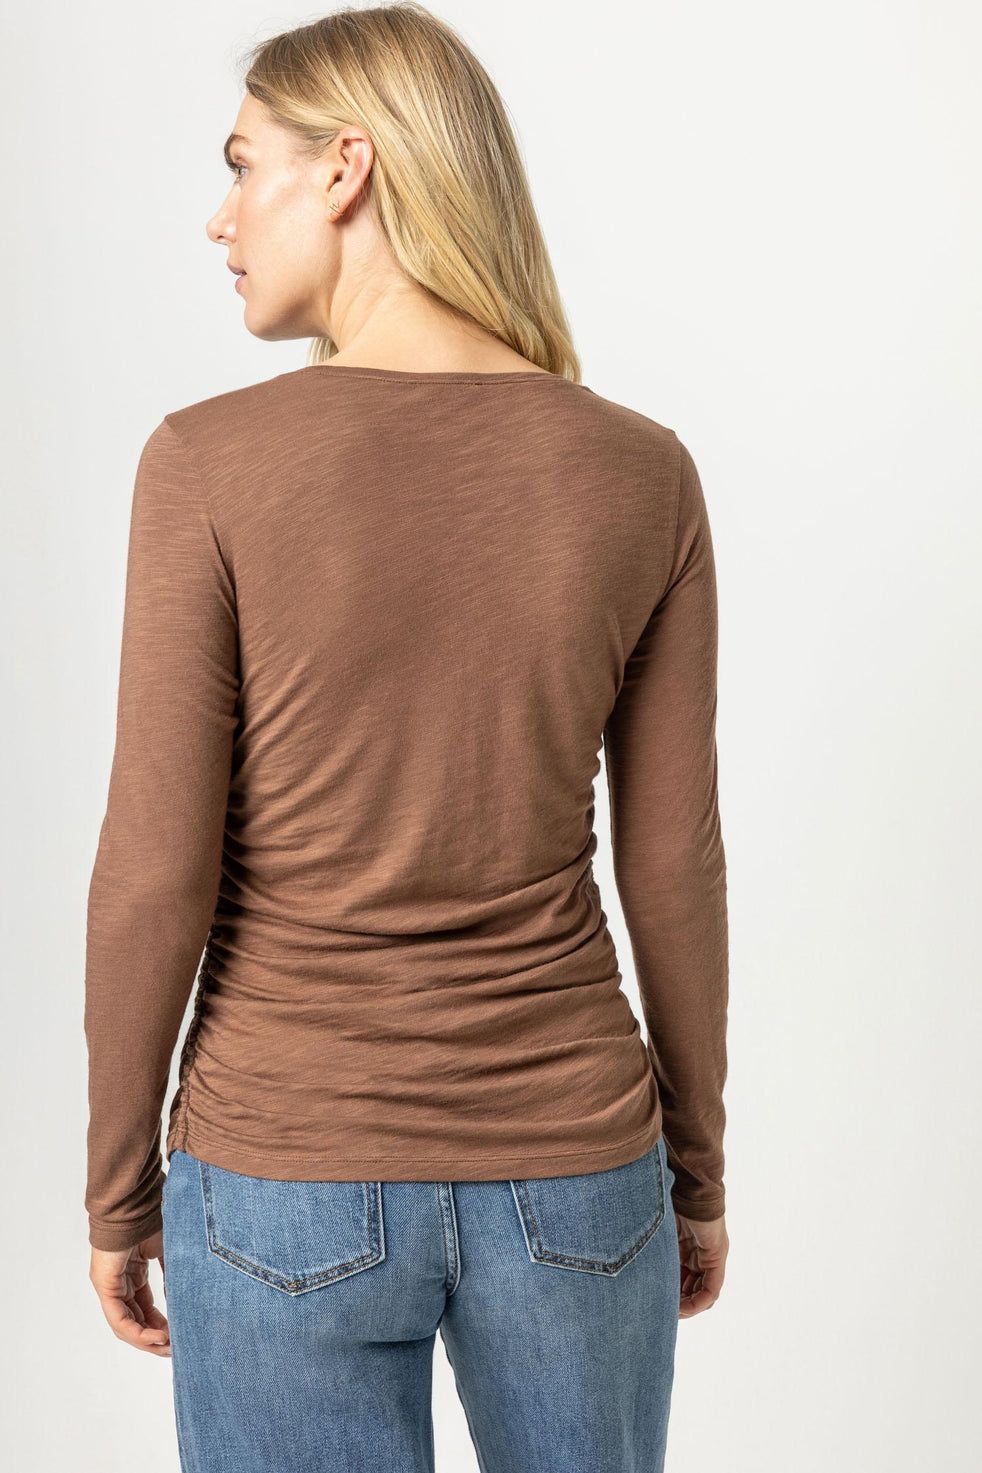 Women's Tops on Sale | Short & Long Sleeve Cotton Shirts for Women